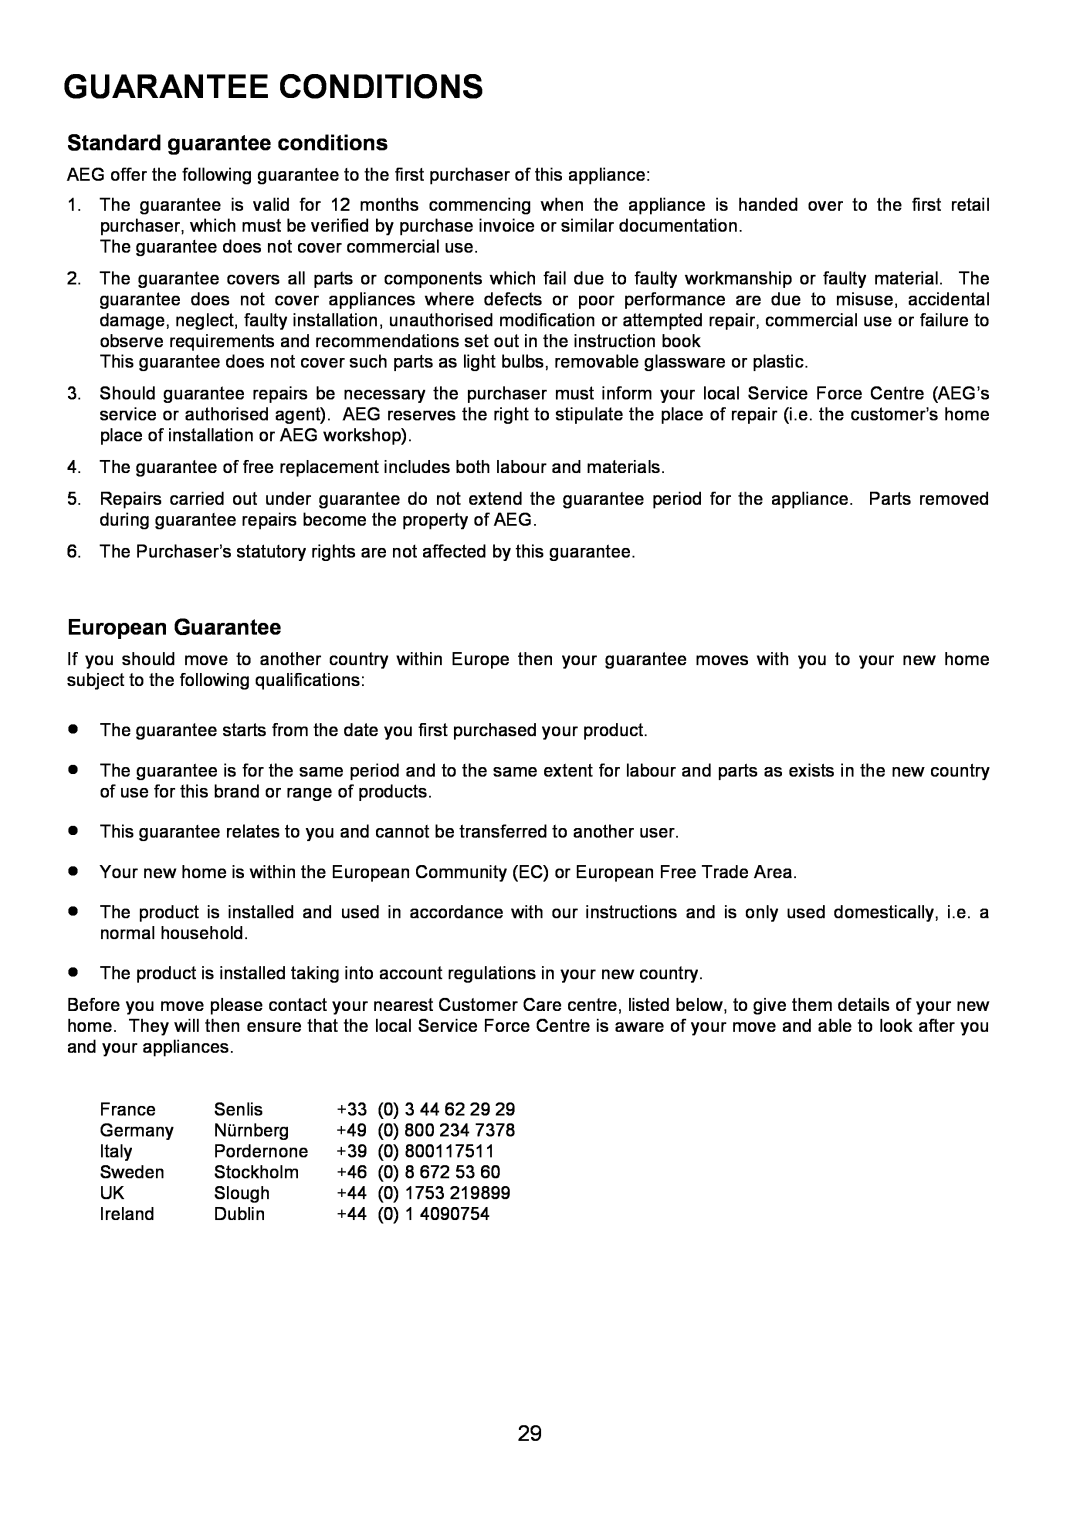 AEG U3100-4 manual Guarantee Conditions, Standard guarantee conditions, European Guarantee 